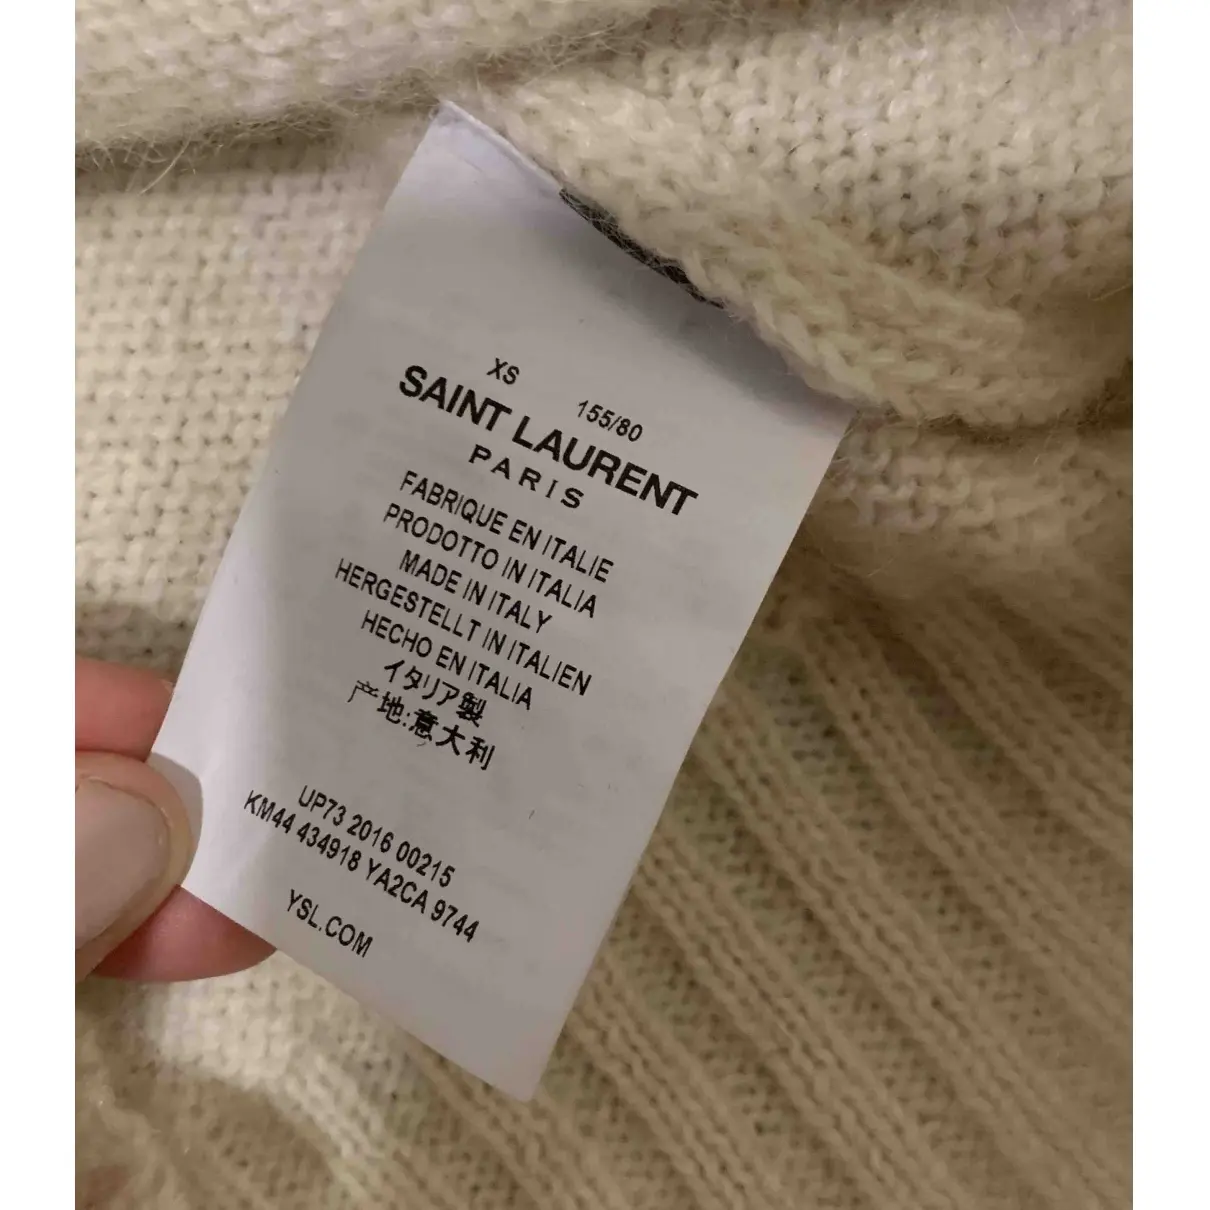 Buy Saint Laurent Wool jumper online